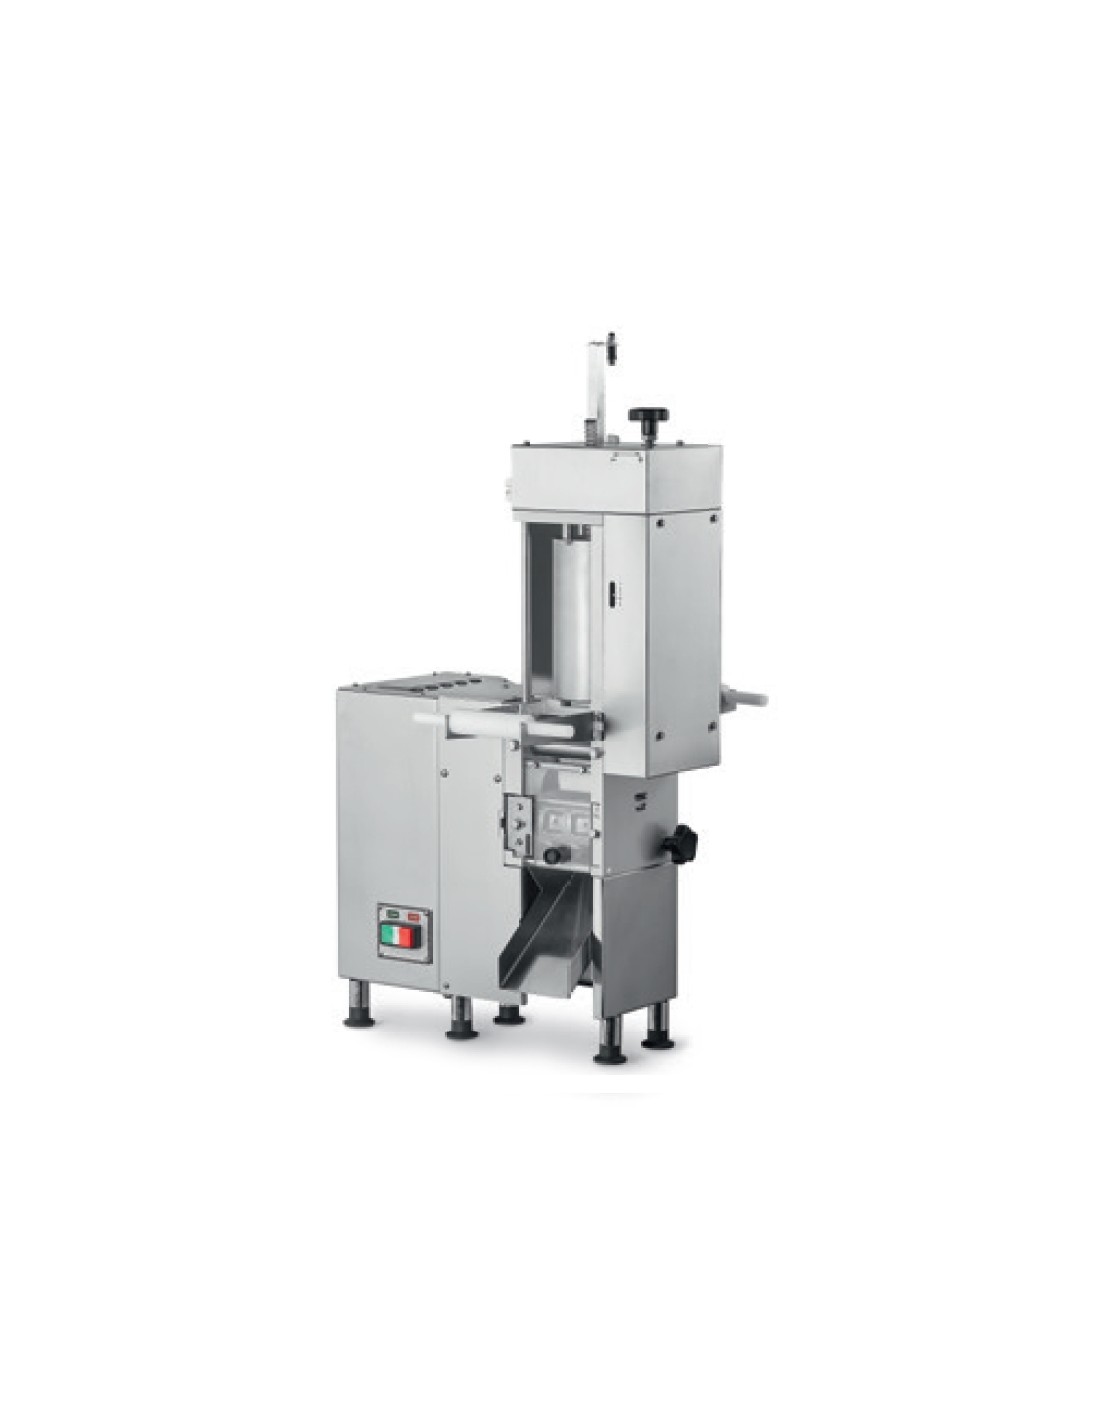 Ravioli machine - Single phase - Double sheet - Max production 20-25 kg/h - cm 45 x 48 x 74 h